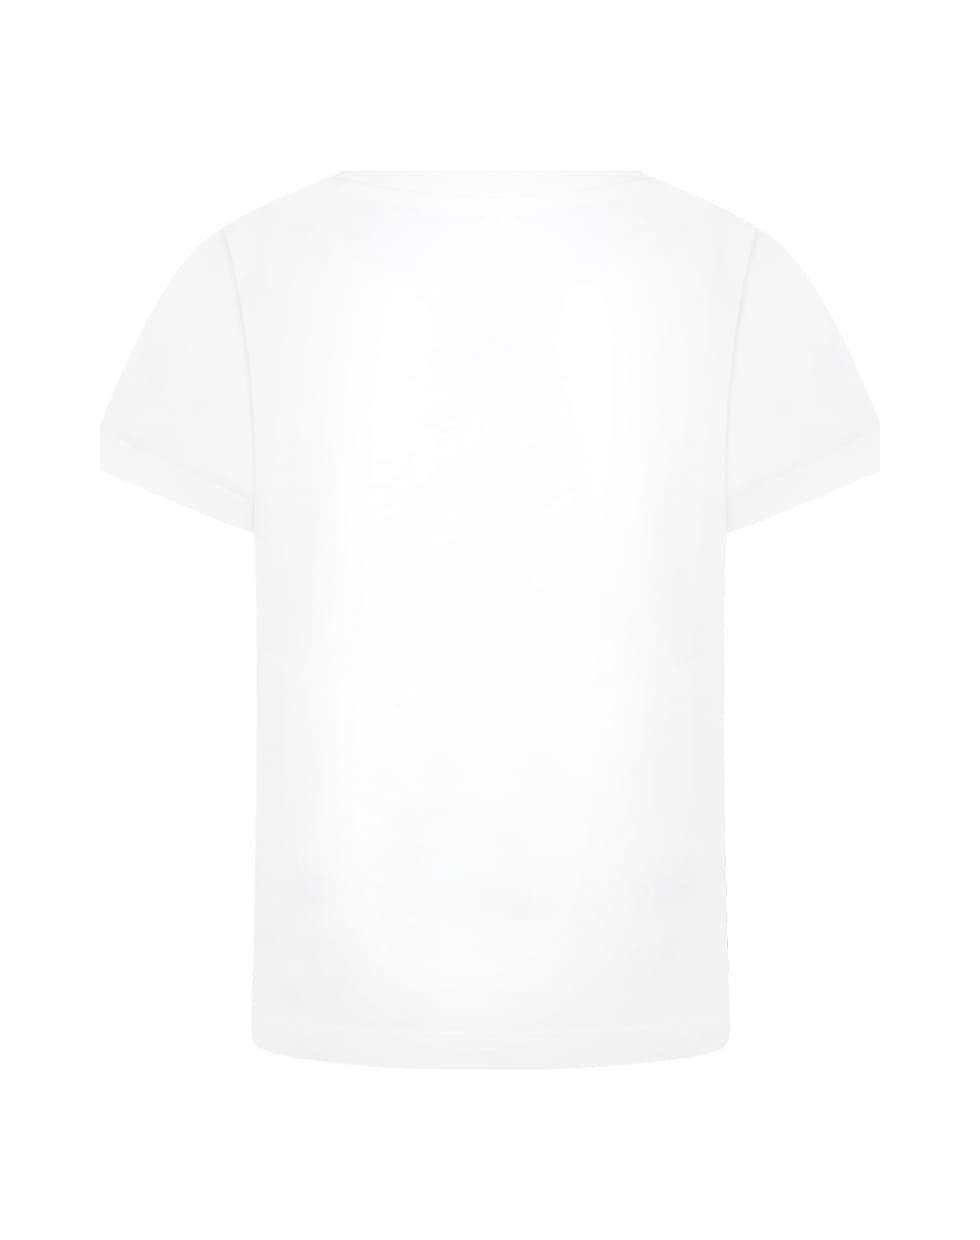 Balmain White T-shirt For Kids With Logos - Bianco/Nero